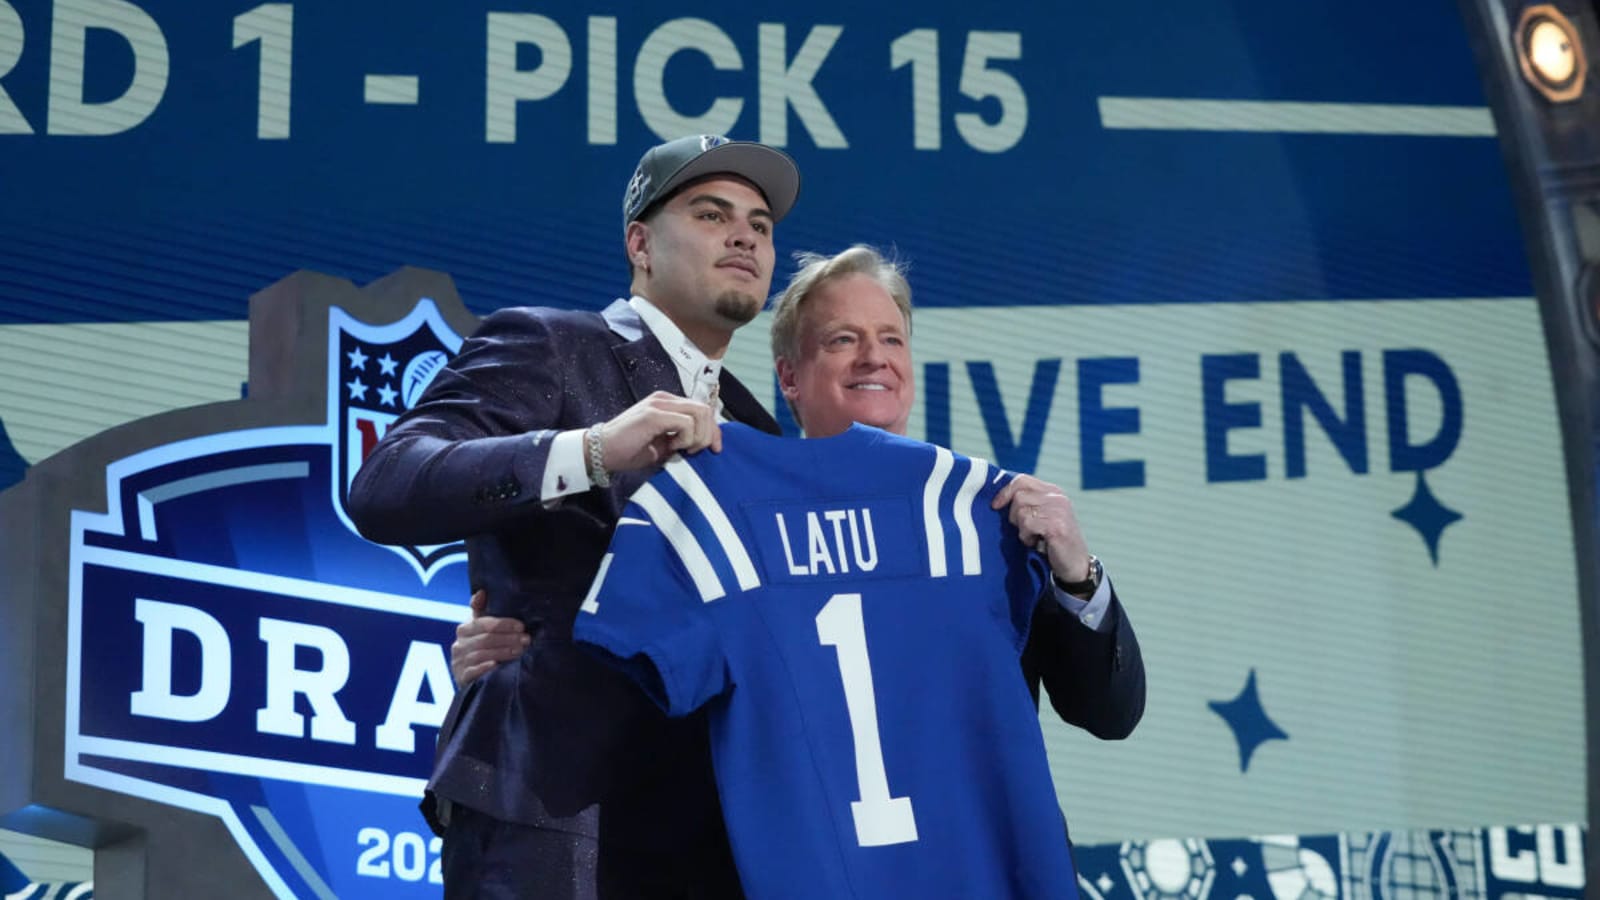 NFL Draft analysts have alot of faith in Laiatu Latu